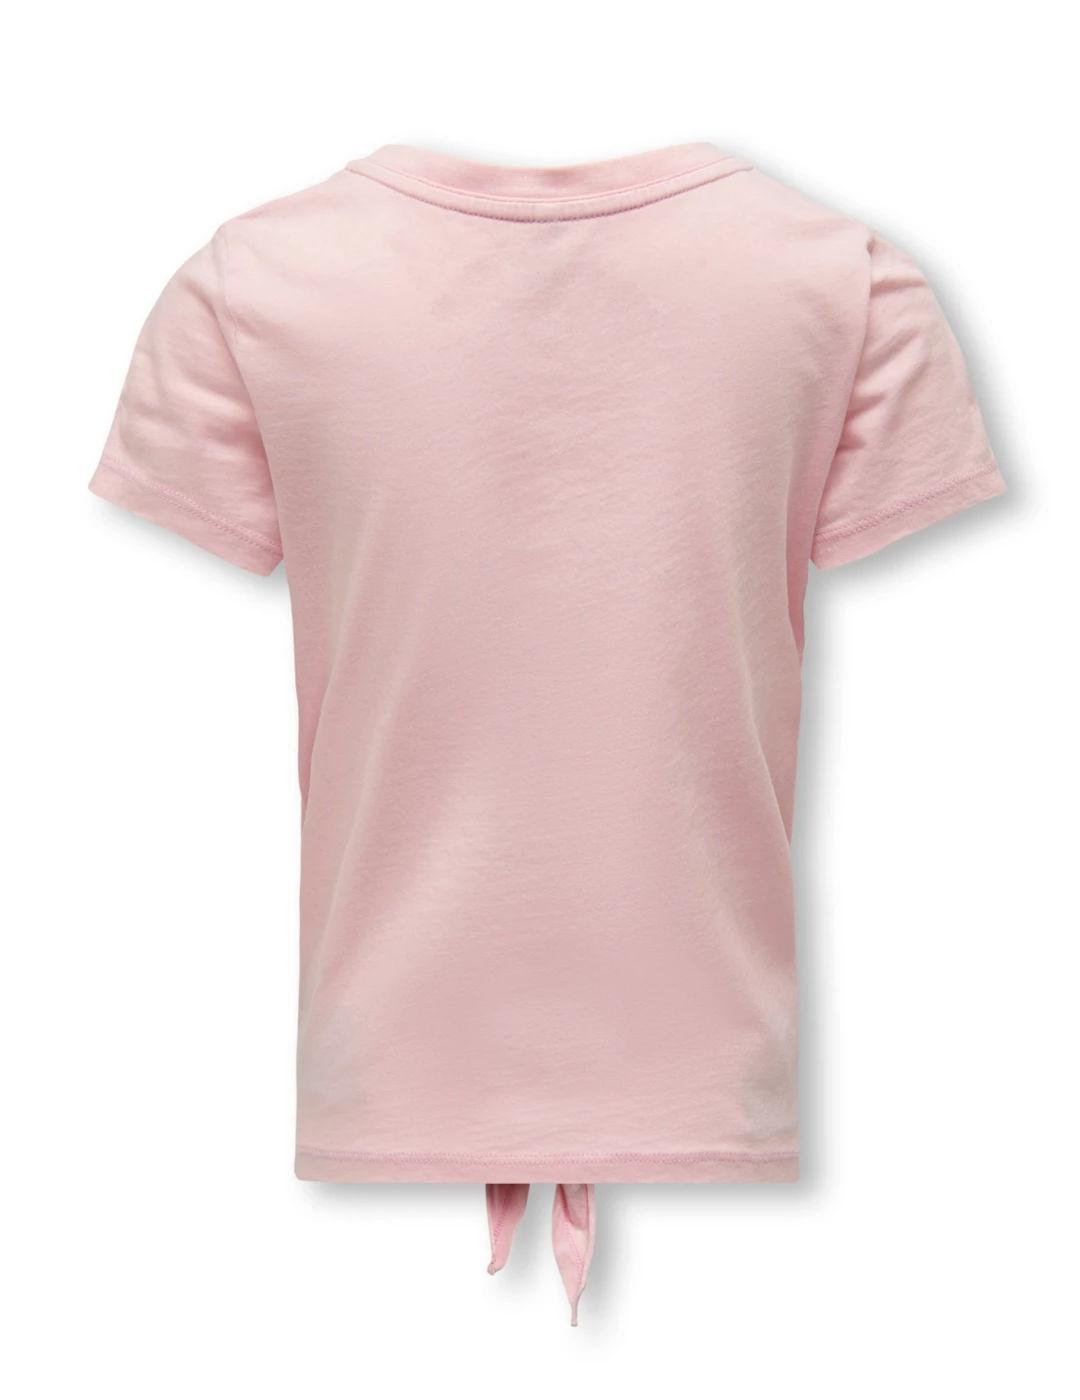 Camiseta Only Kids Glucy rosa manga corta para niña